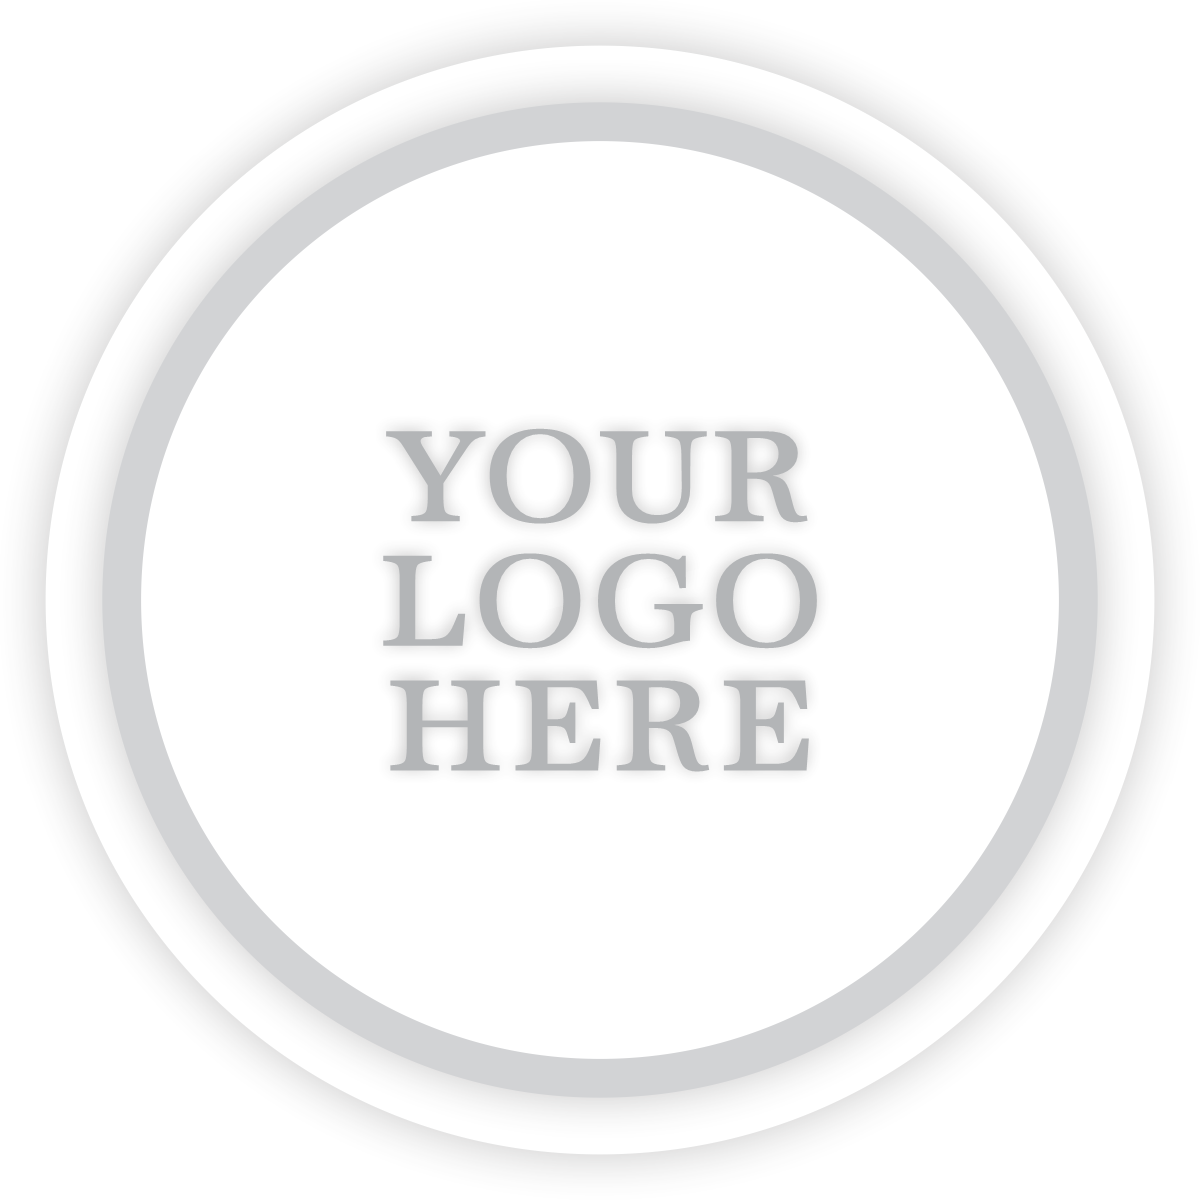 Exterior Round Sign | Custom Logo Signs